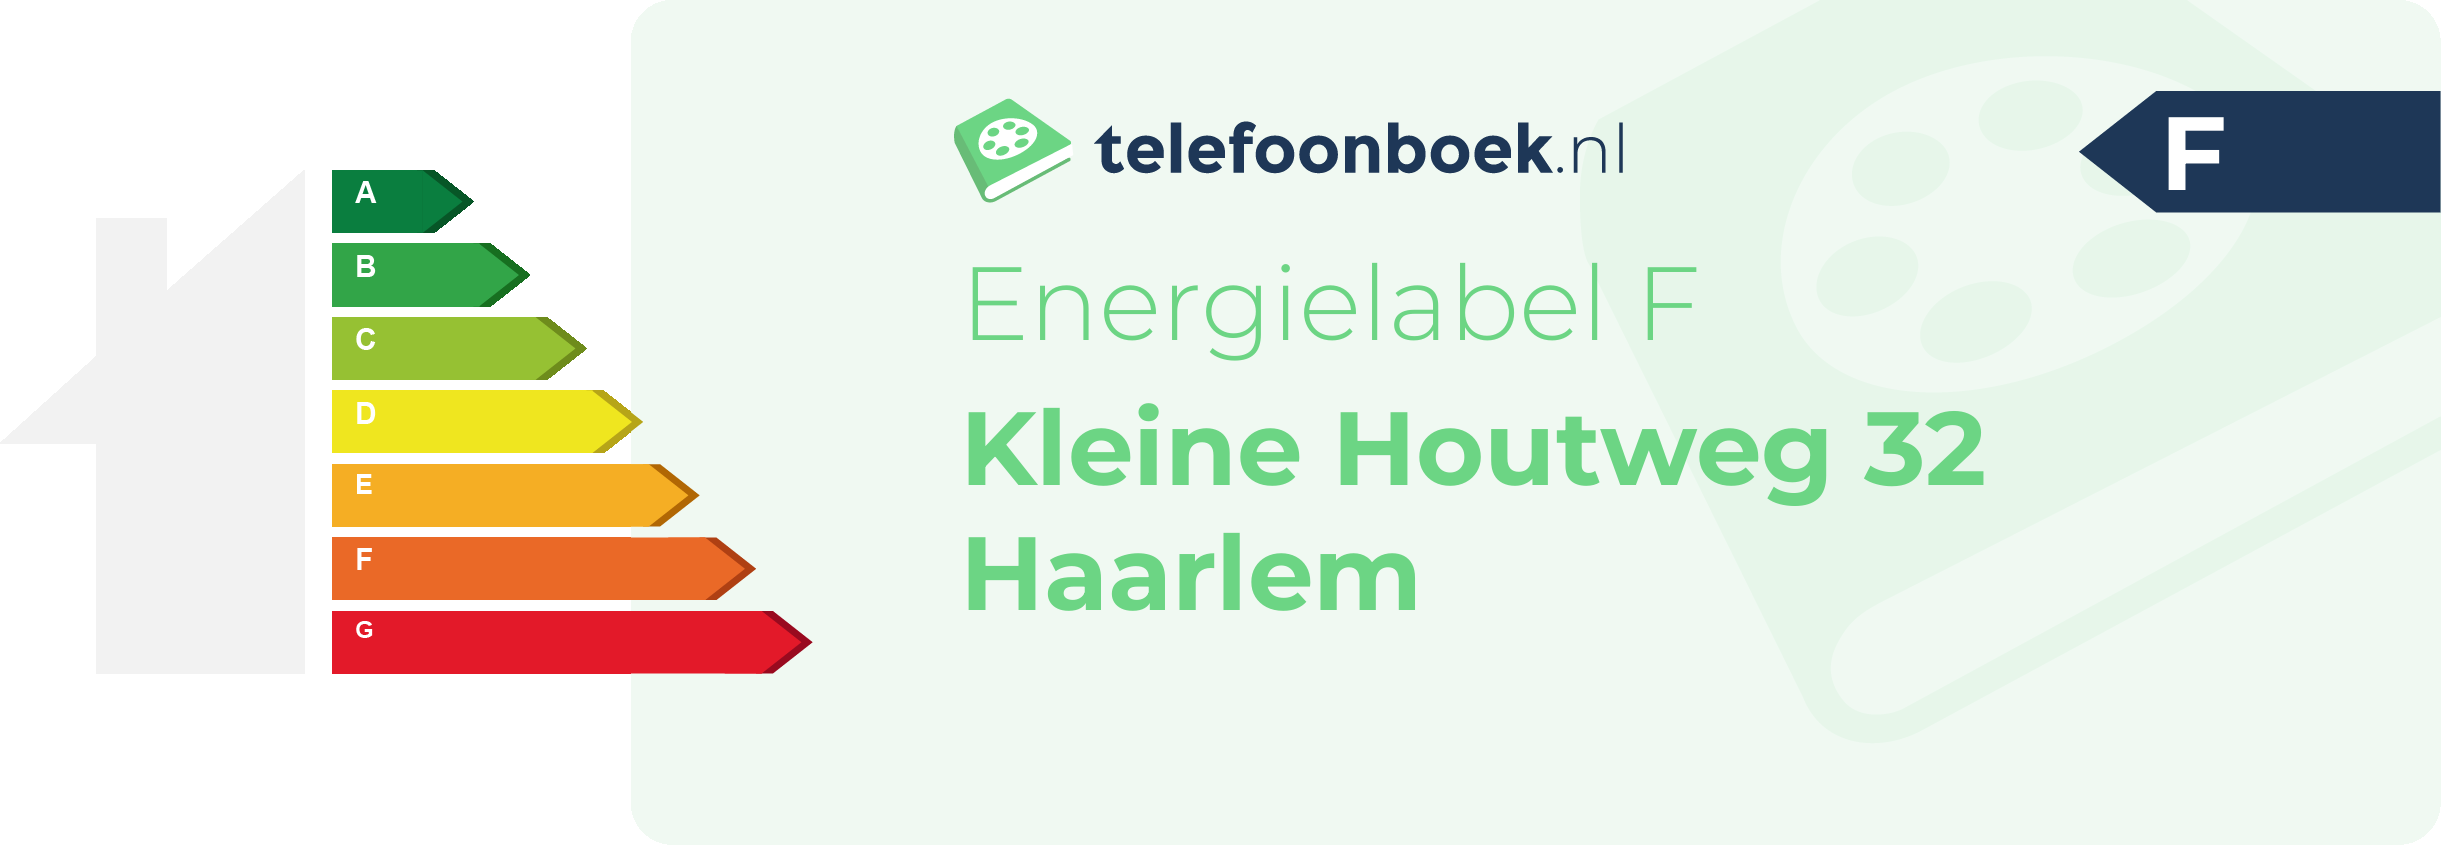 Energielabel Kleine Houtweg 32 Haarlem